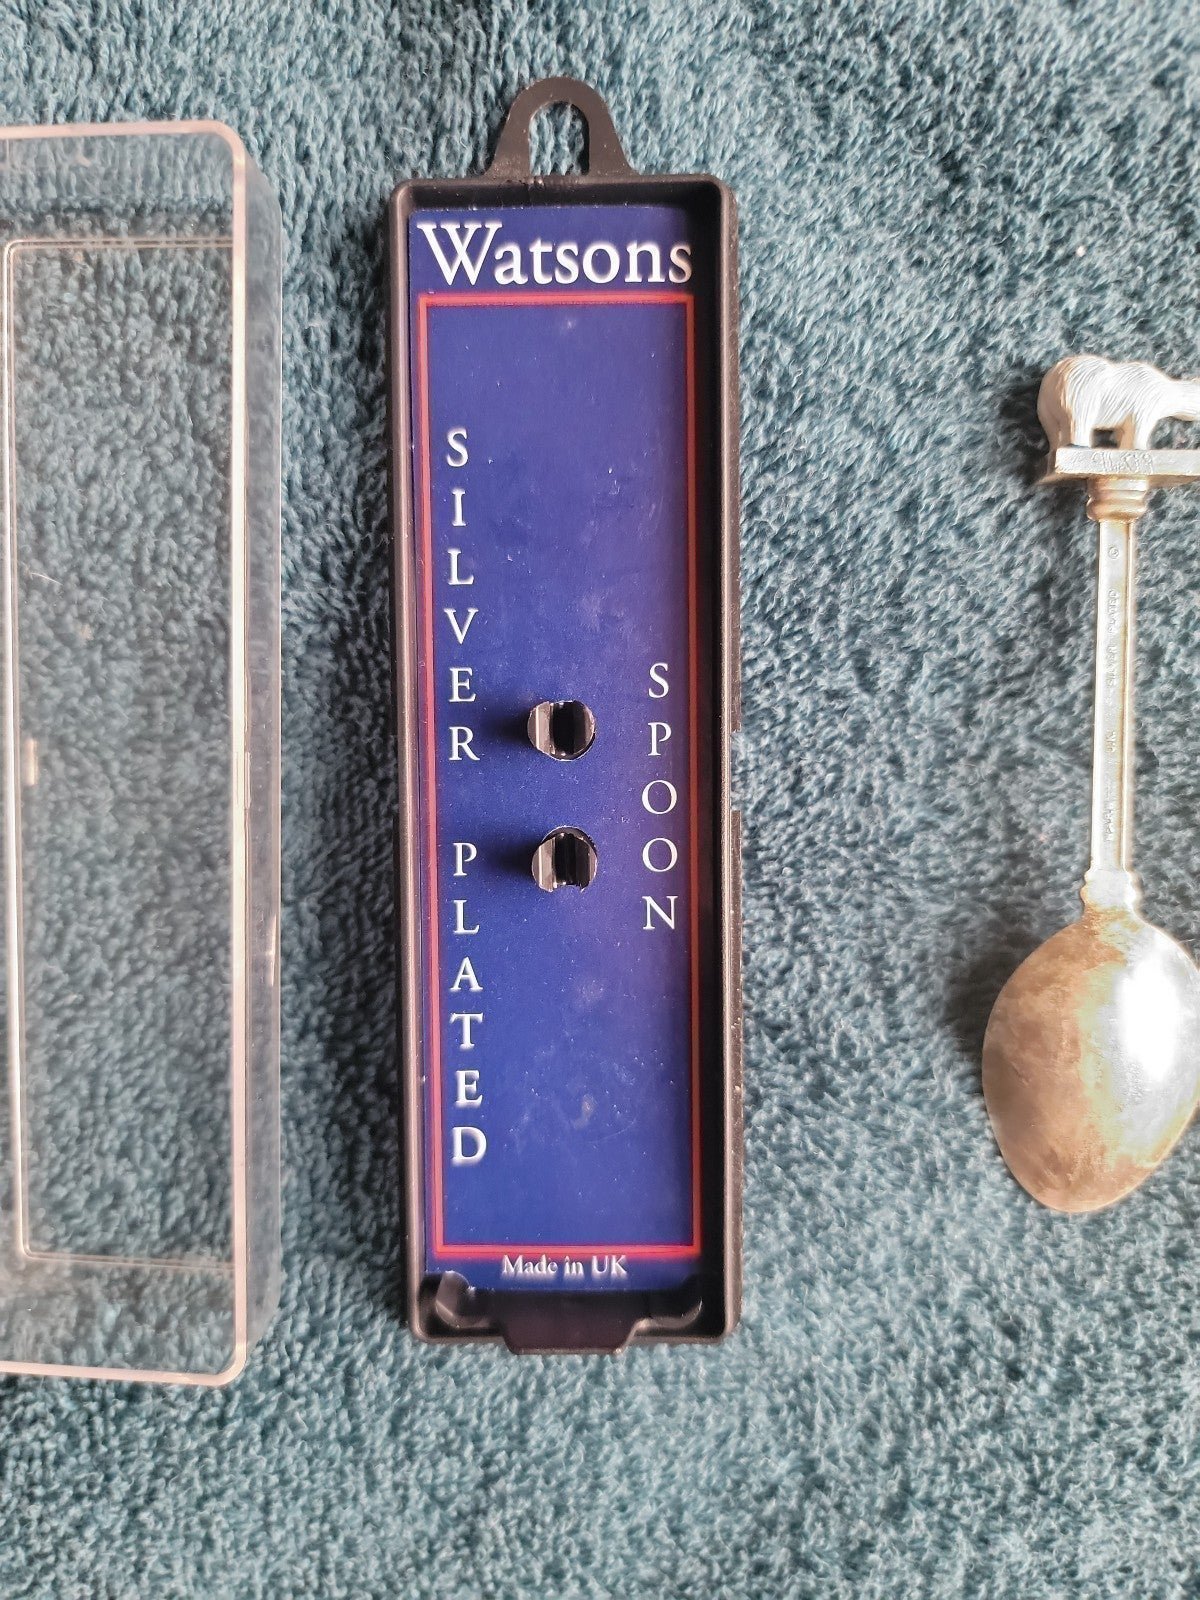 Watson Vintage Silver Plated Spoon eNzgB8khF